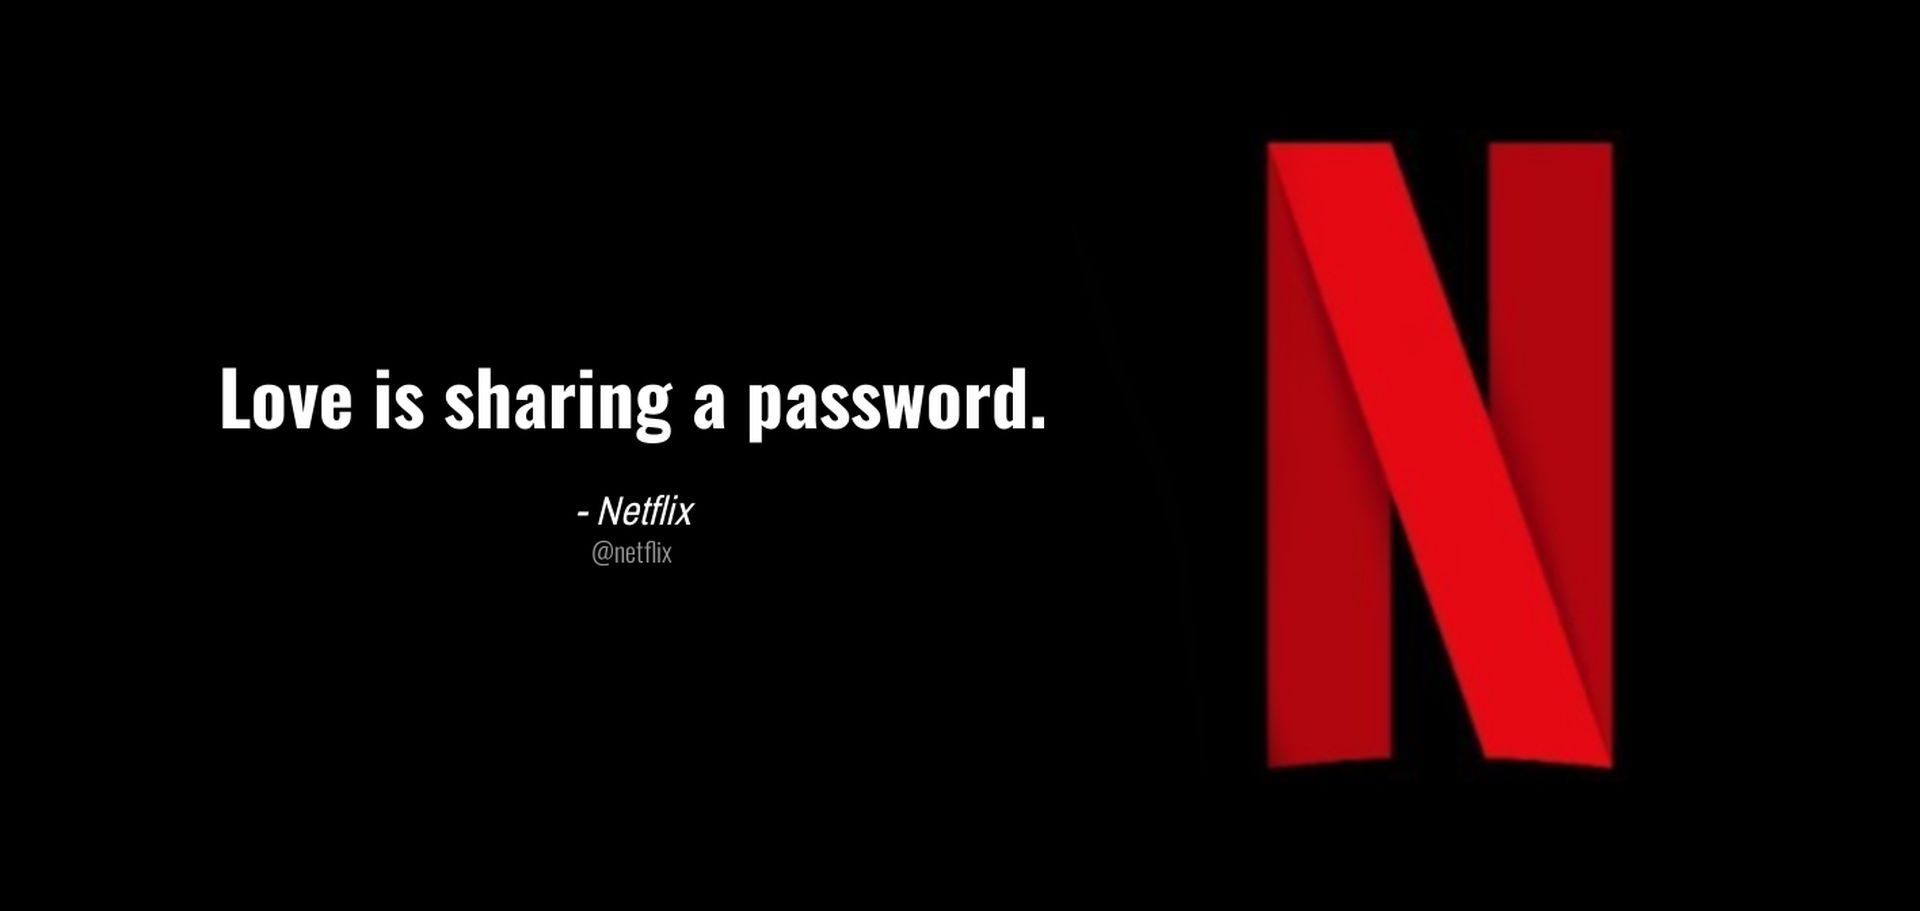 how to beat netflix password sharing